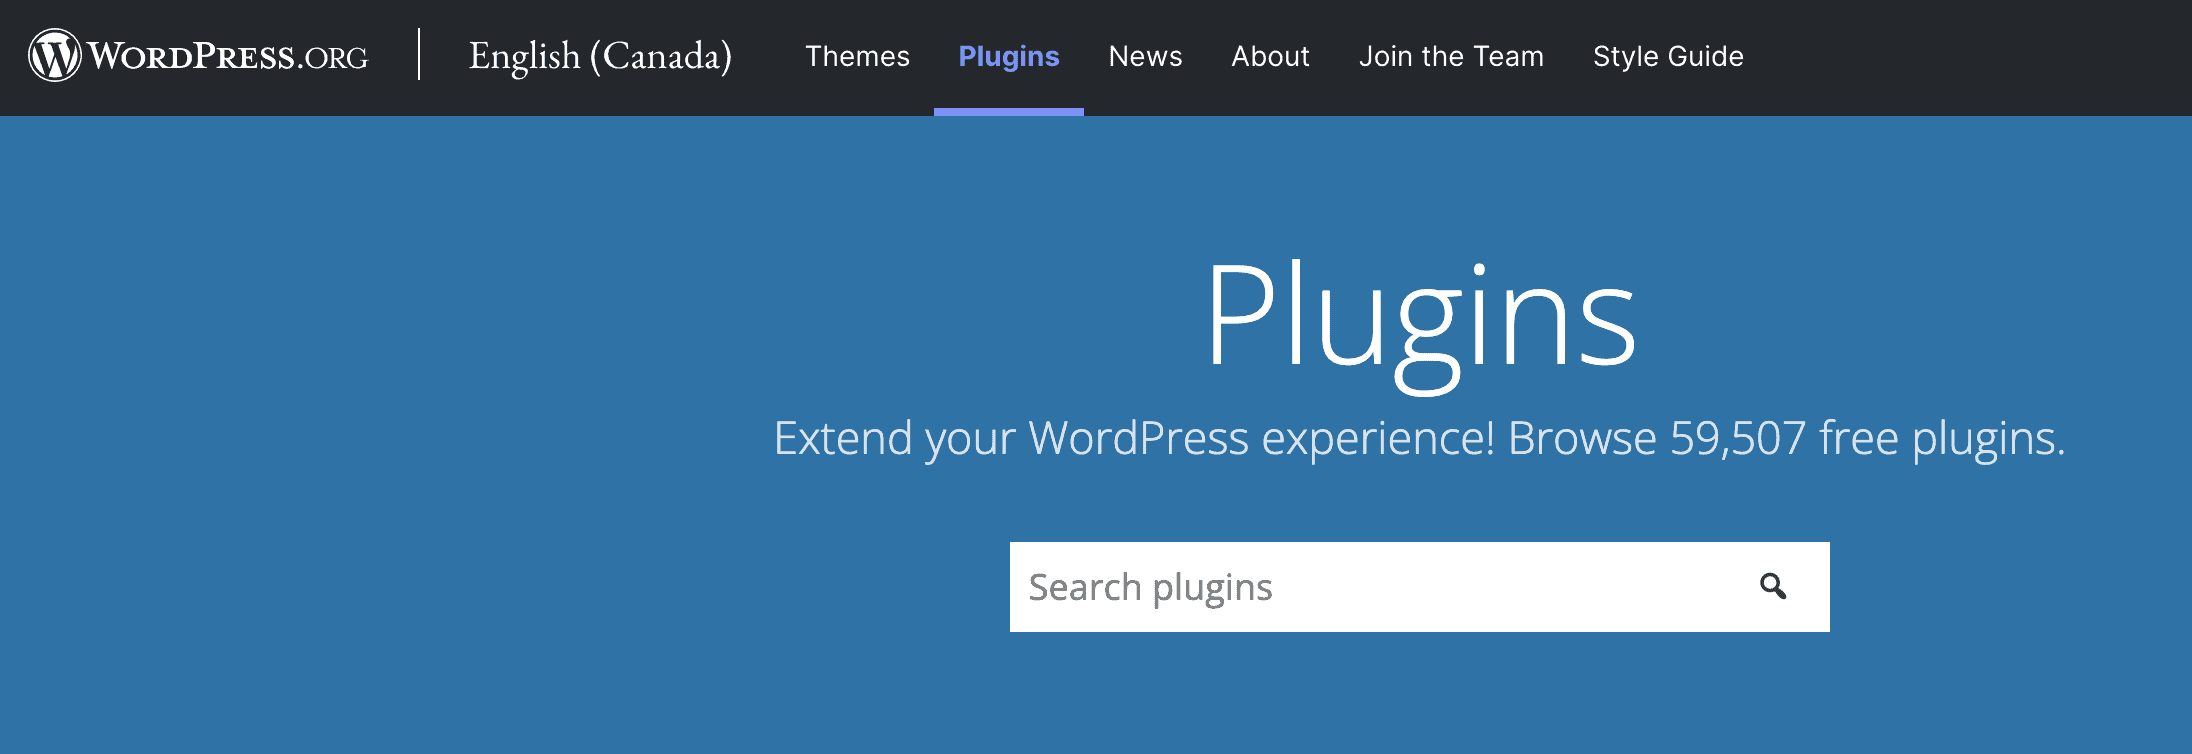 wordpress plug-ins